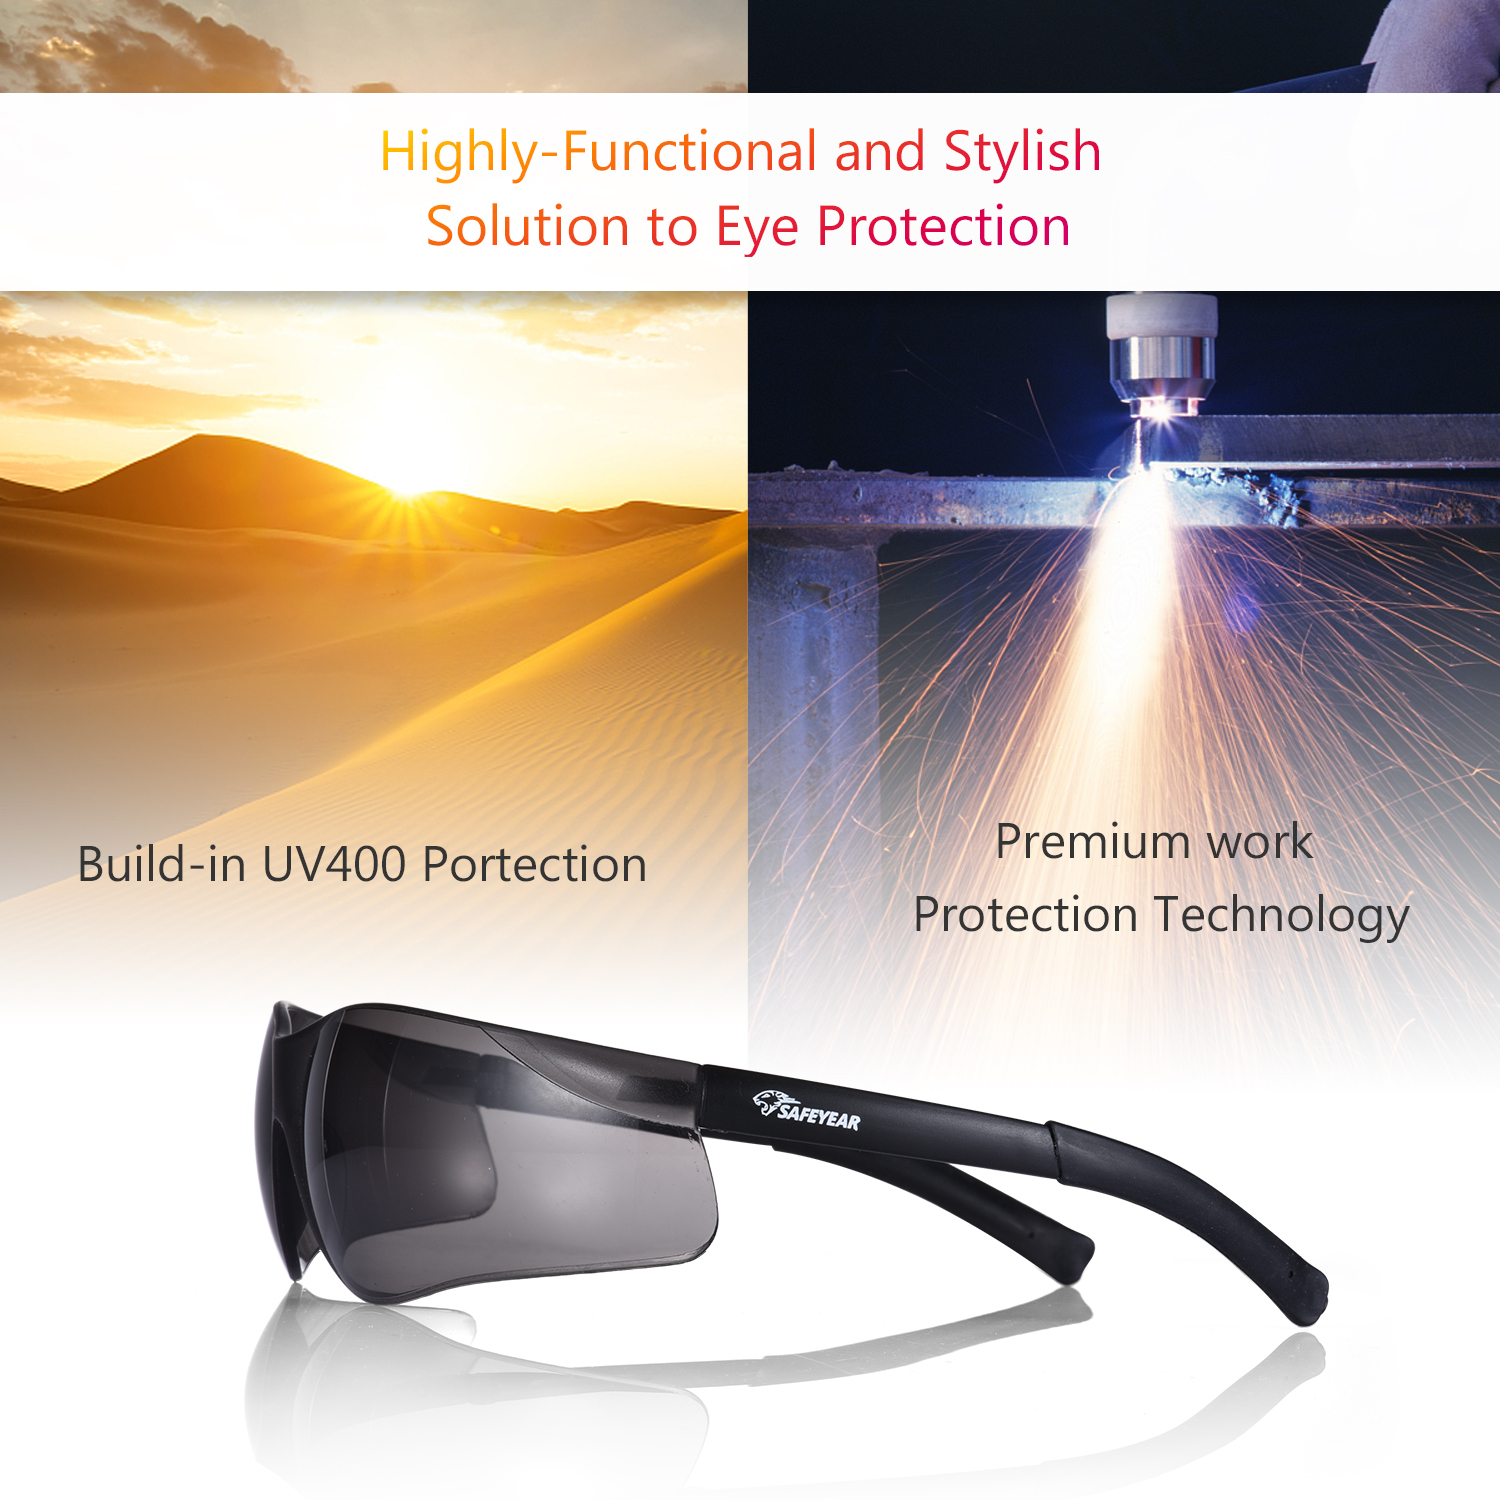 Dark Lens Safety Sunglasses SG019